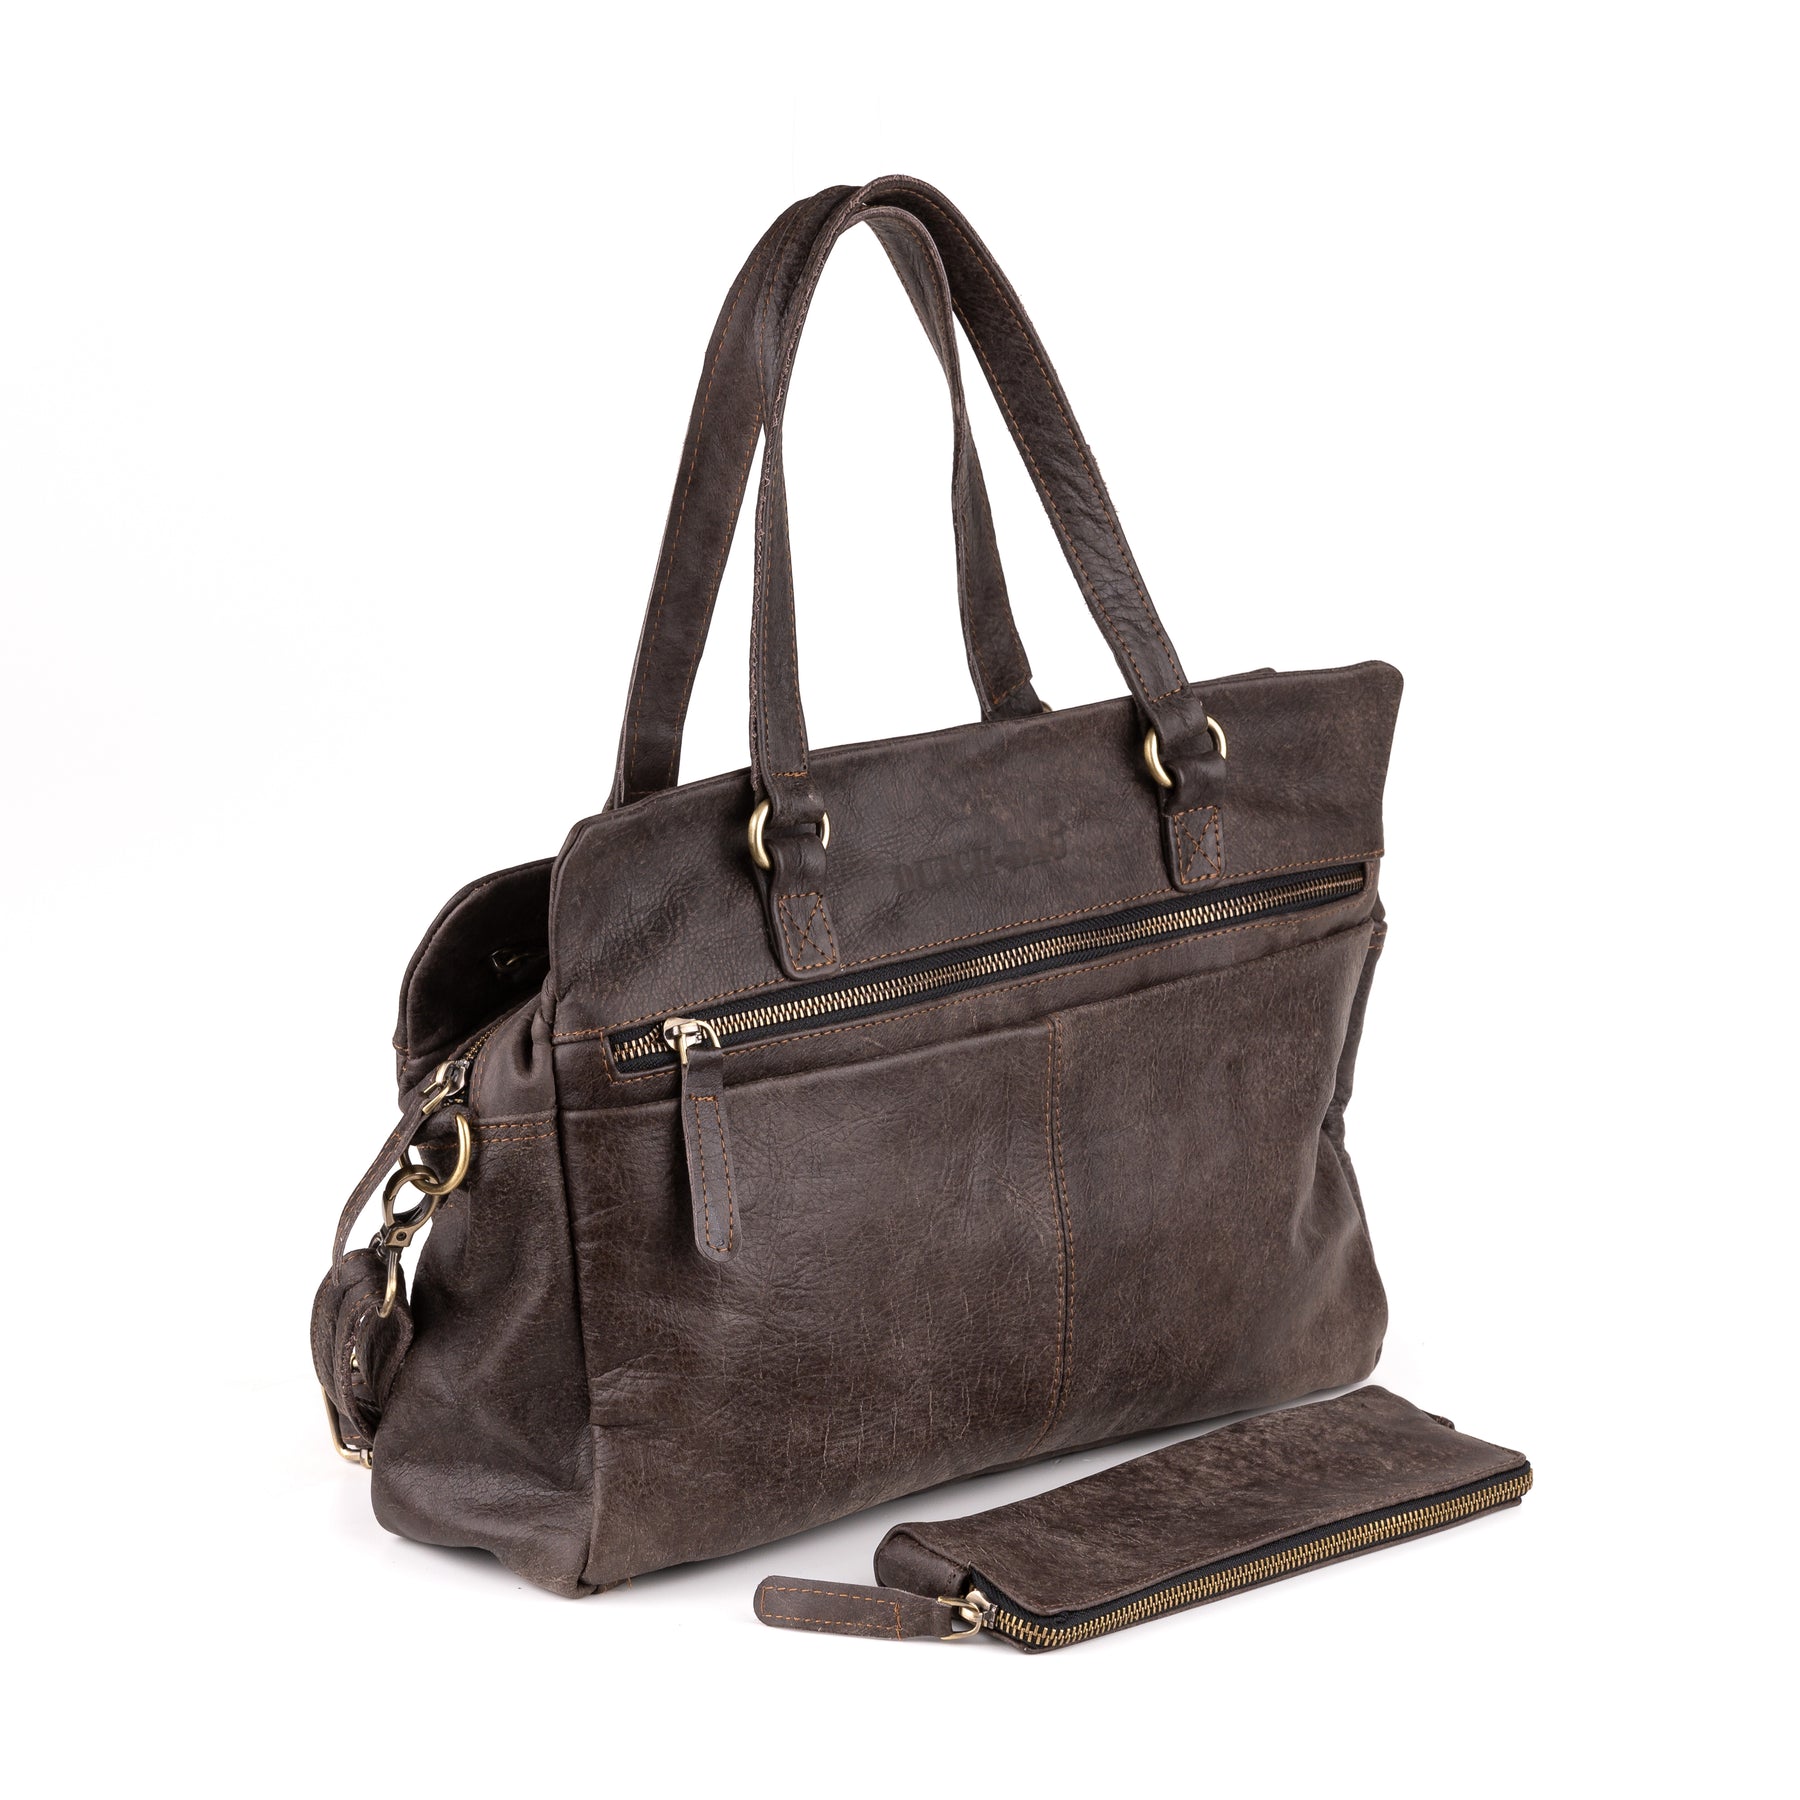 Arnhem Ladies Handbag Leather Espresso - Concrete leather